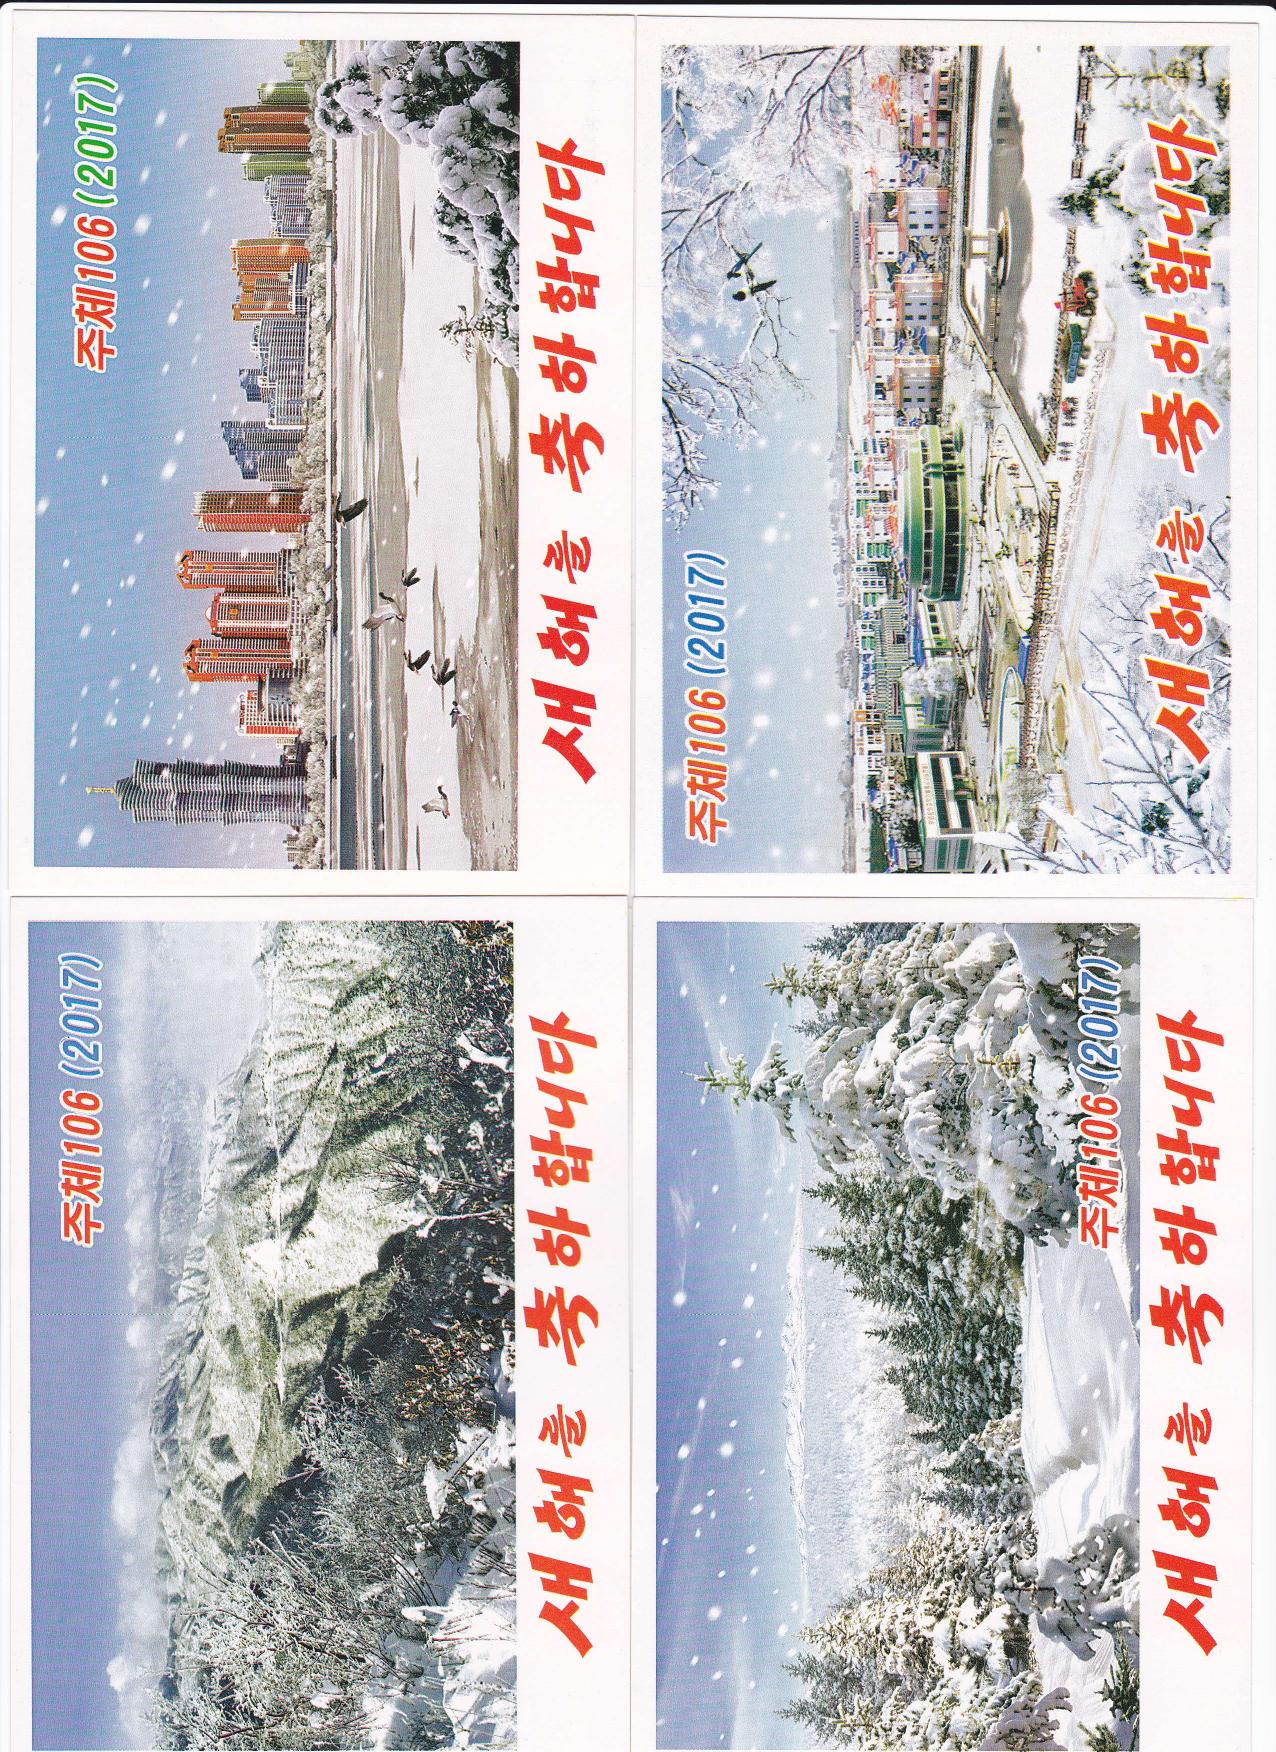 L9326, Korea 2017 Happy New Year Postal Card, 5 pcs